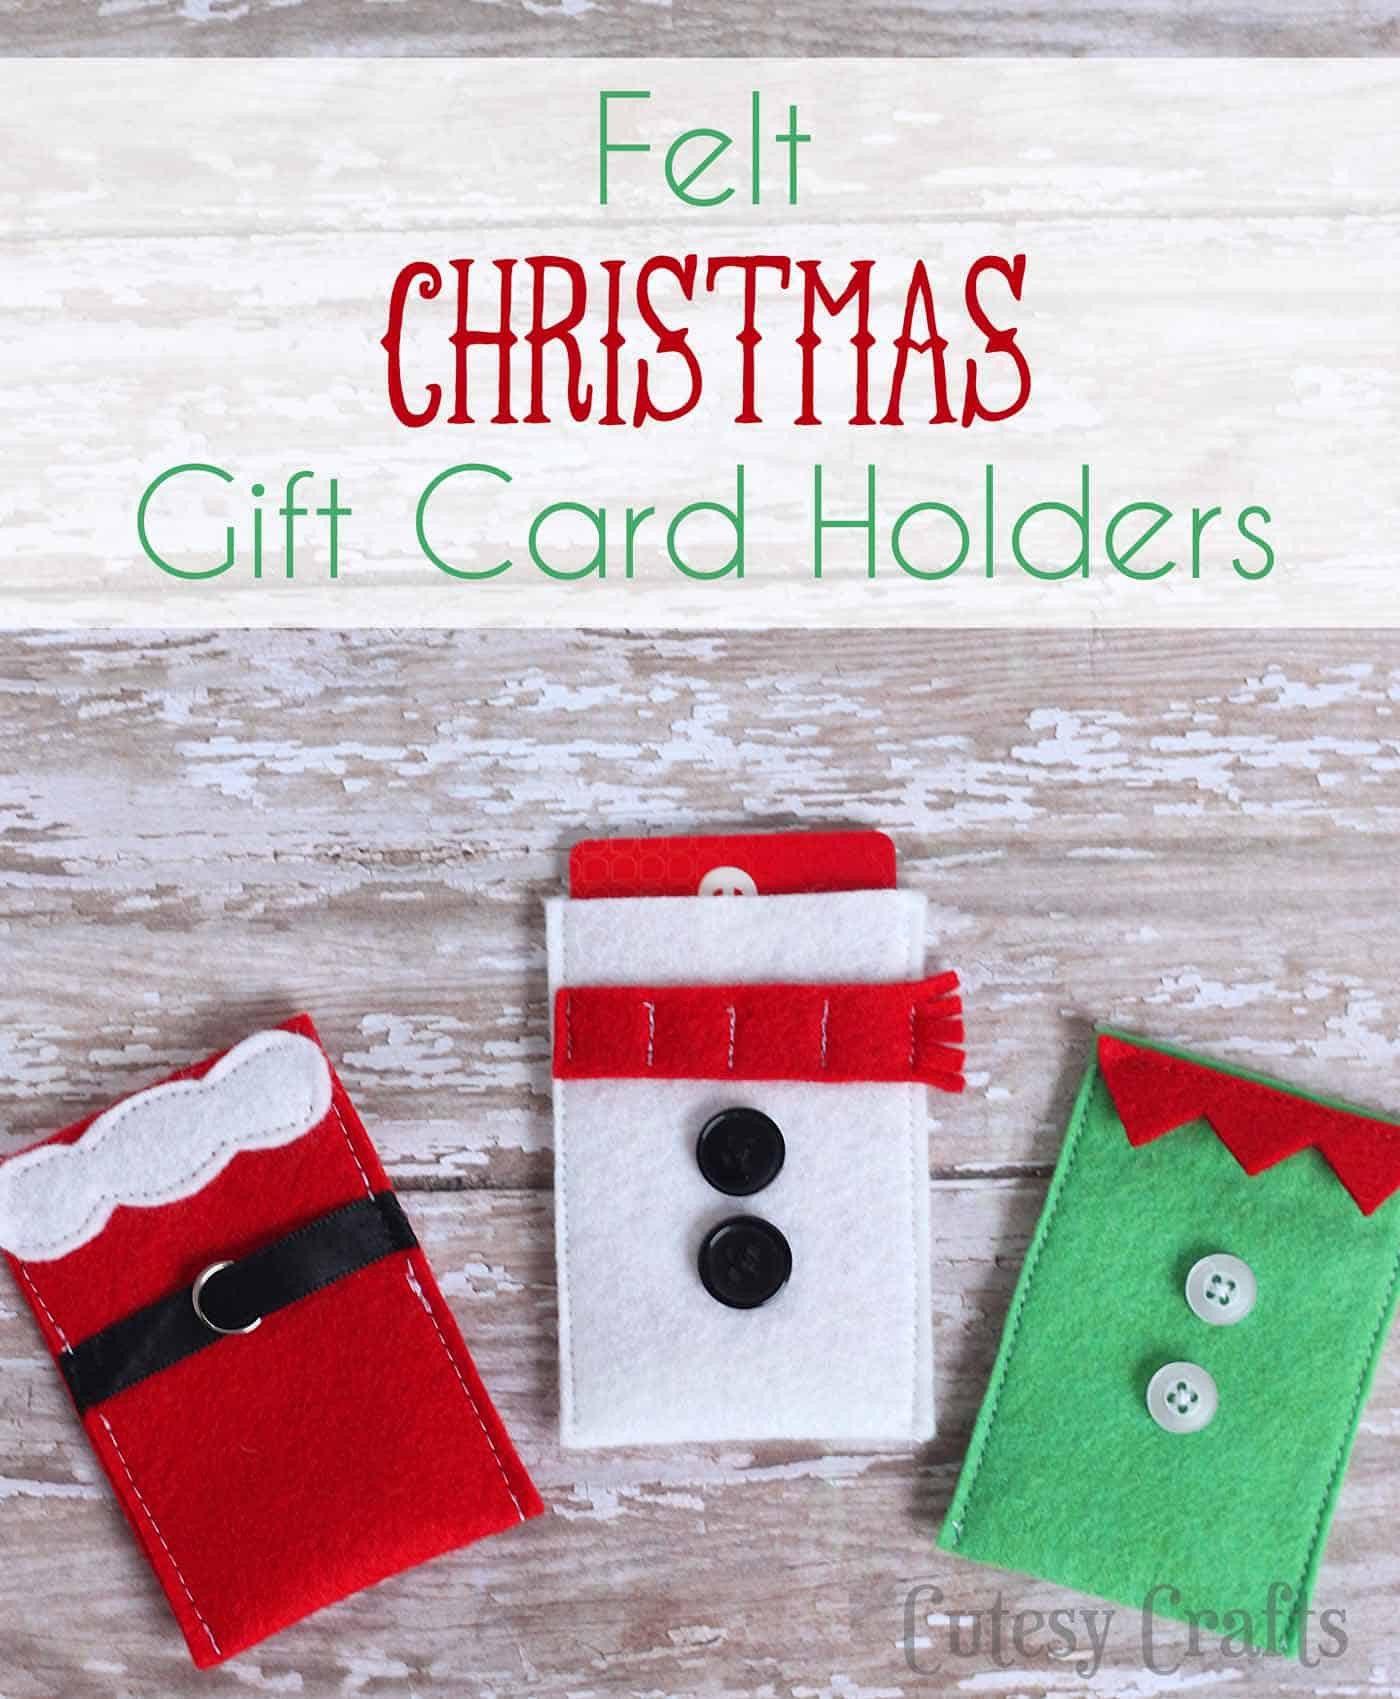 DIY Christmas Gift Card Holder
 Felt Christmas Gift Card Holders diycandy